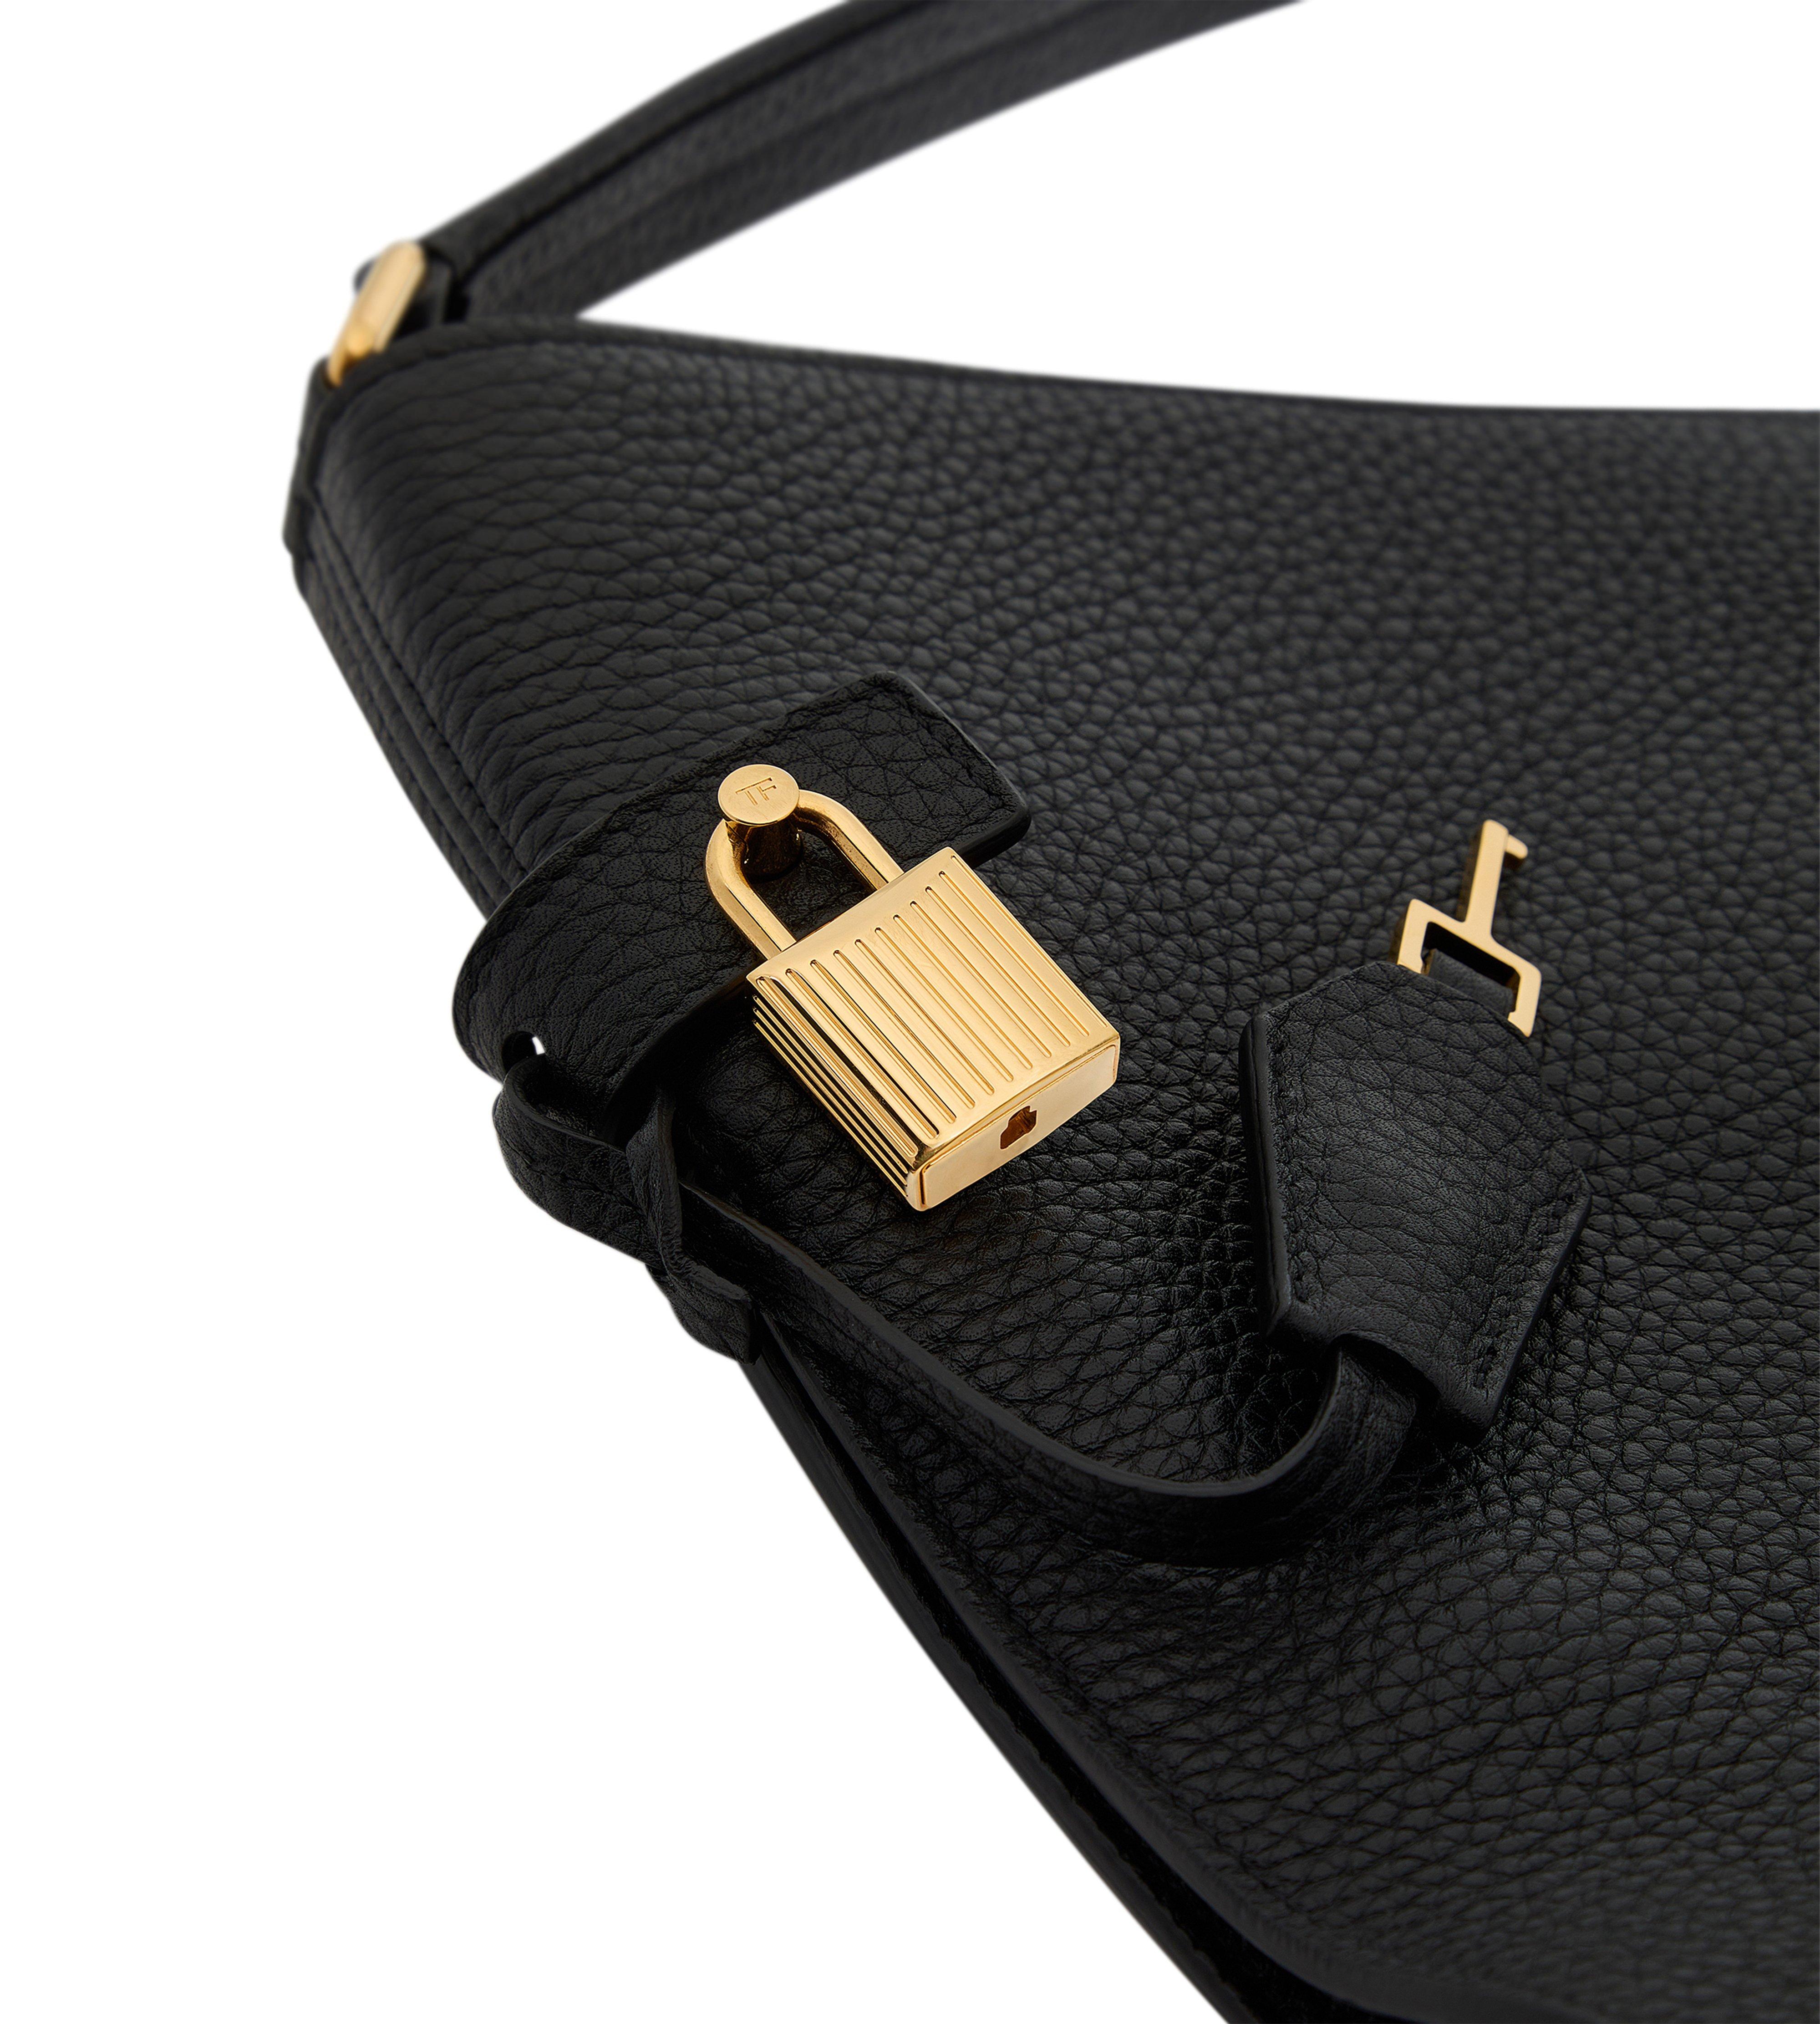 TOM FORD ALIX Nude Textured Leather Gold Padlock Clutch Handbag